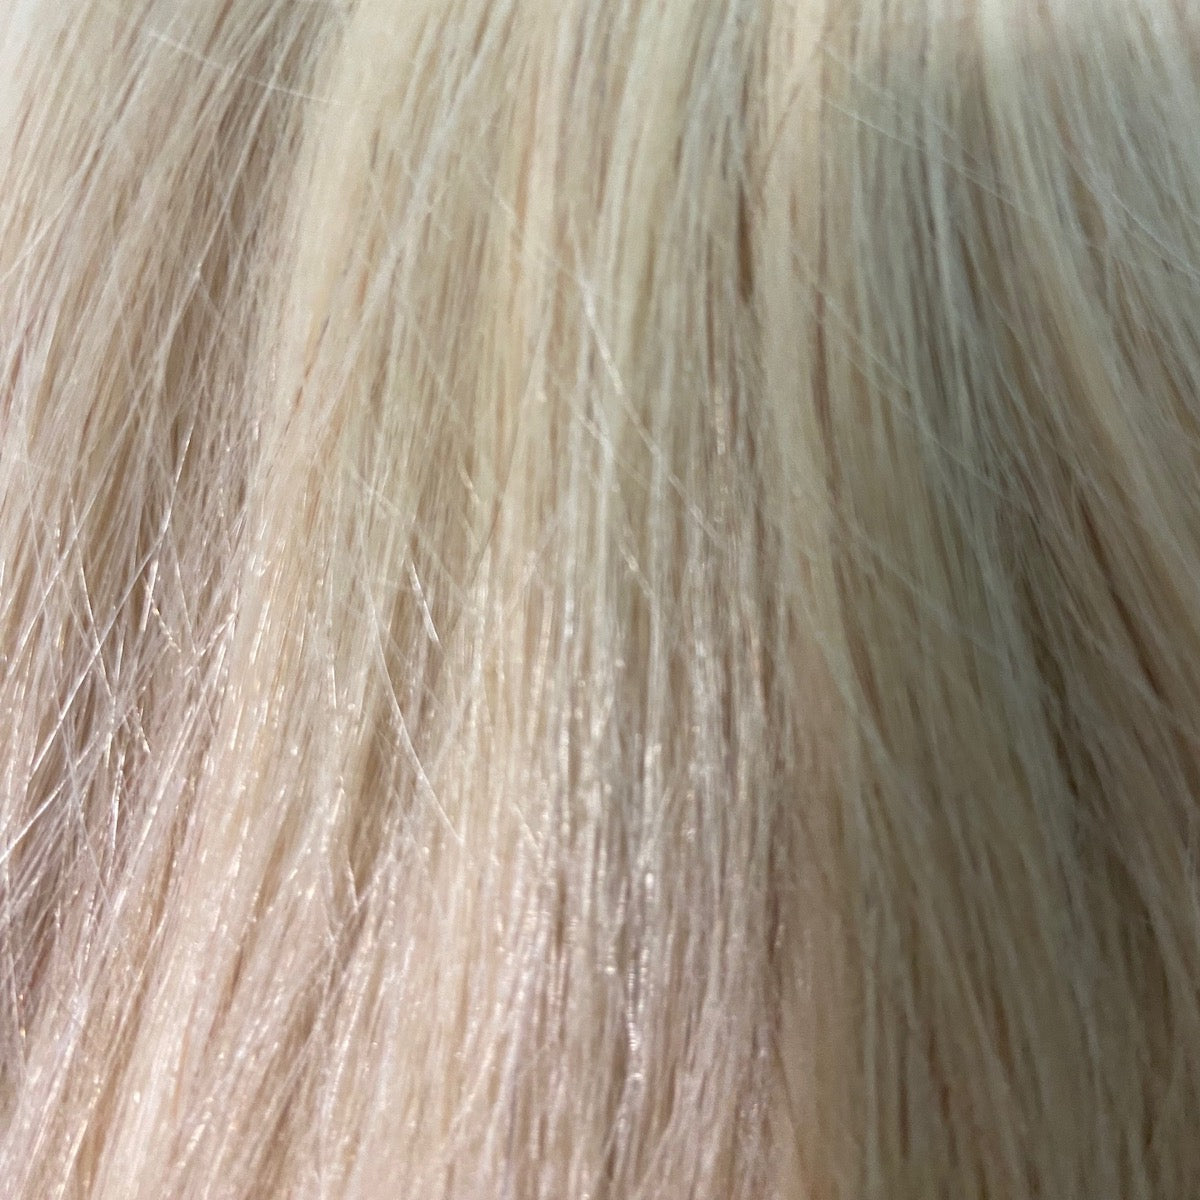 K-Tip 16" 25g Professional Hair Extensions - #19 Desert Blonde